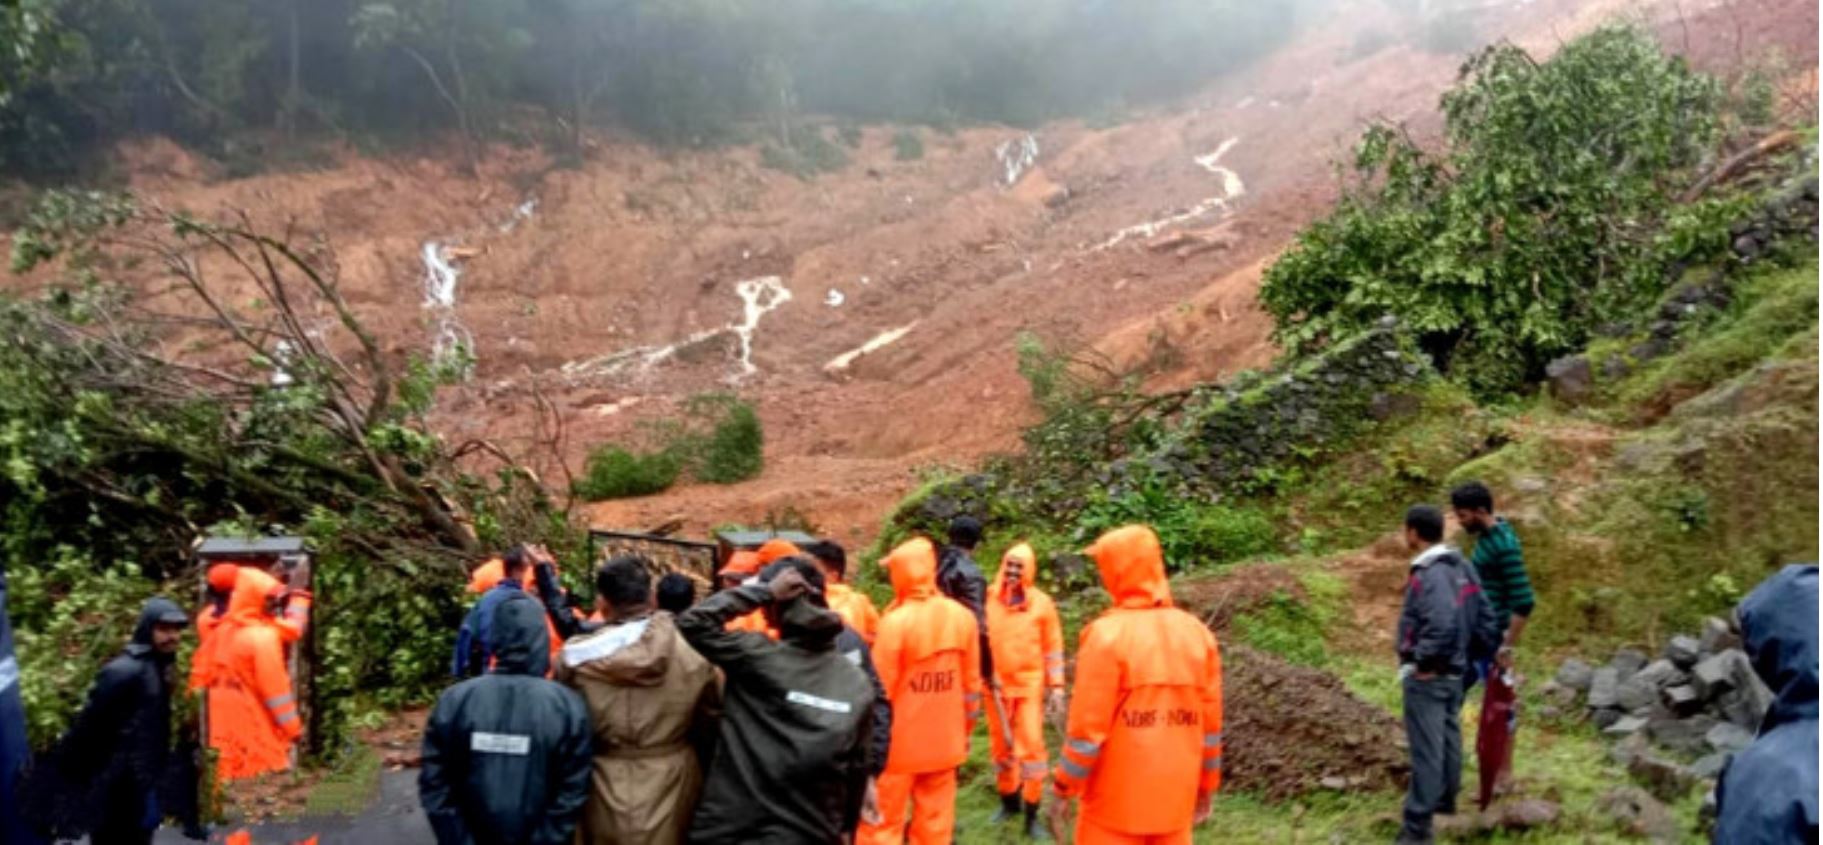 The Rajmala landslide in Kerala, India